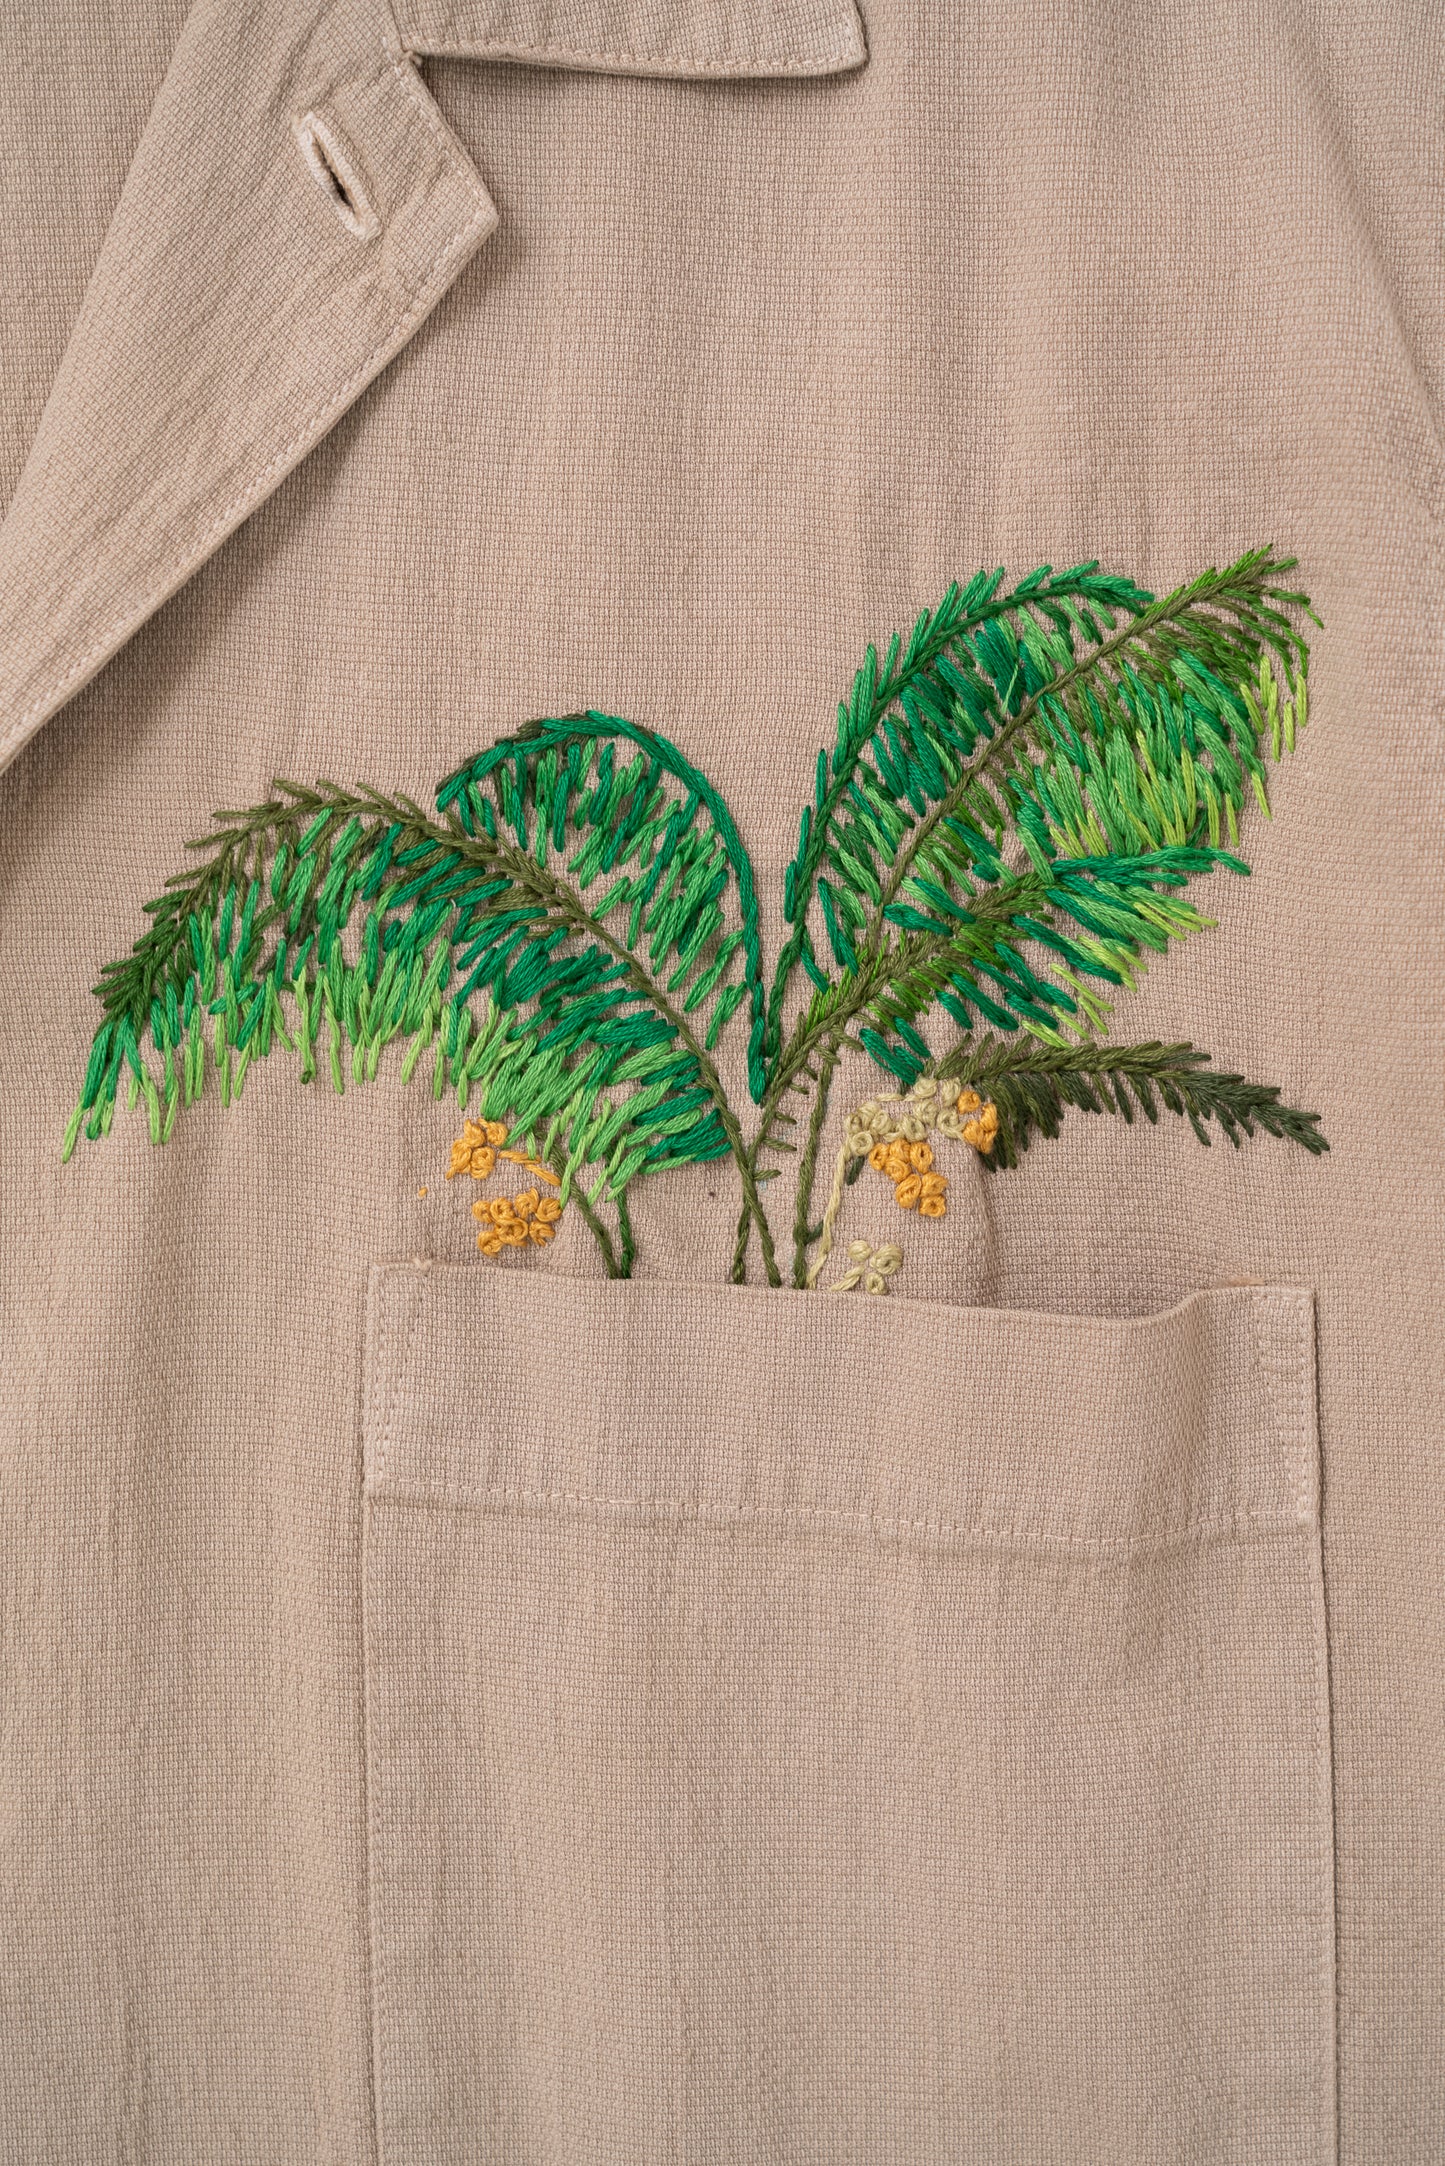 Crinkle S/S Shirt - Oversized Palm